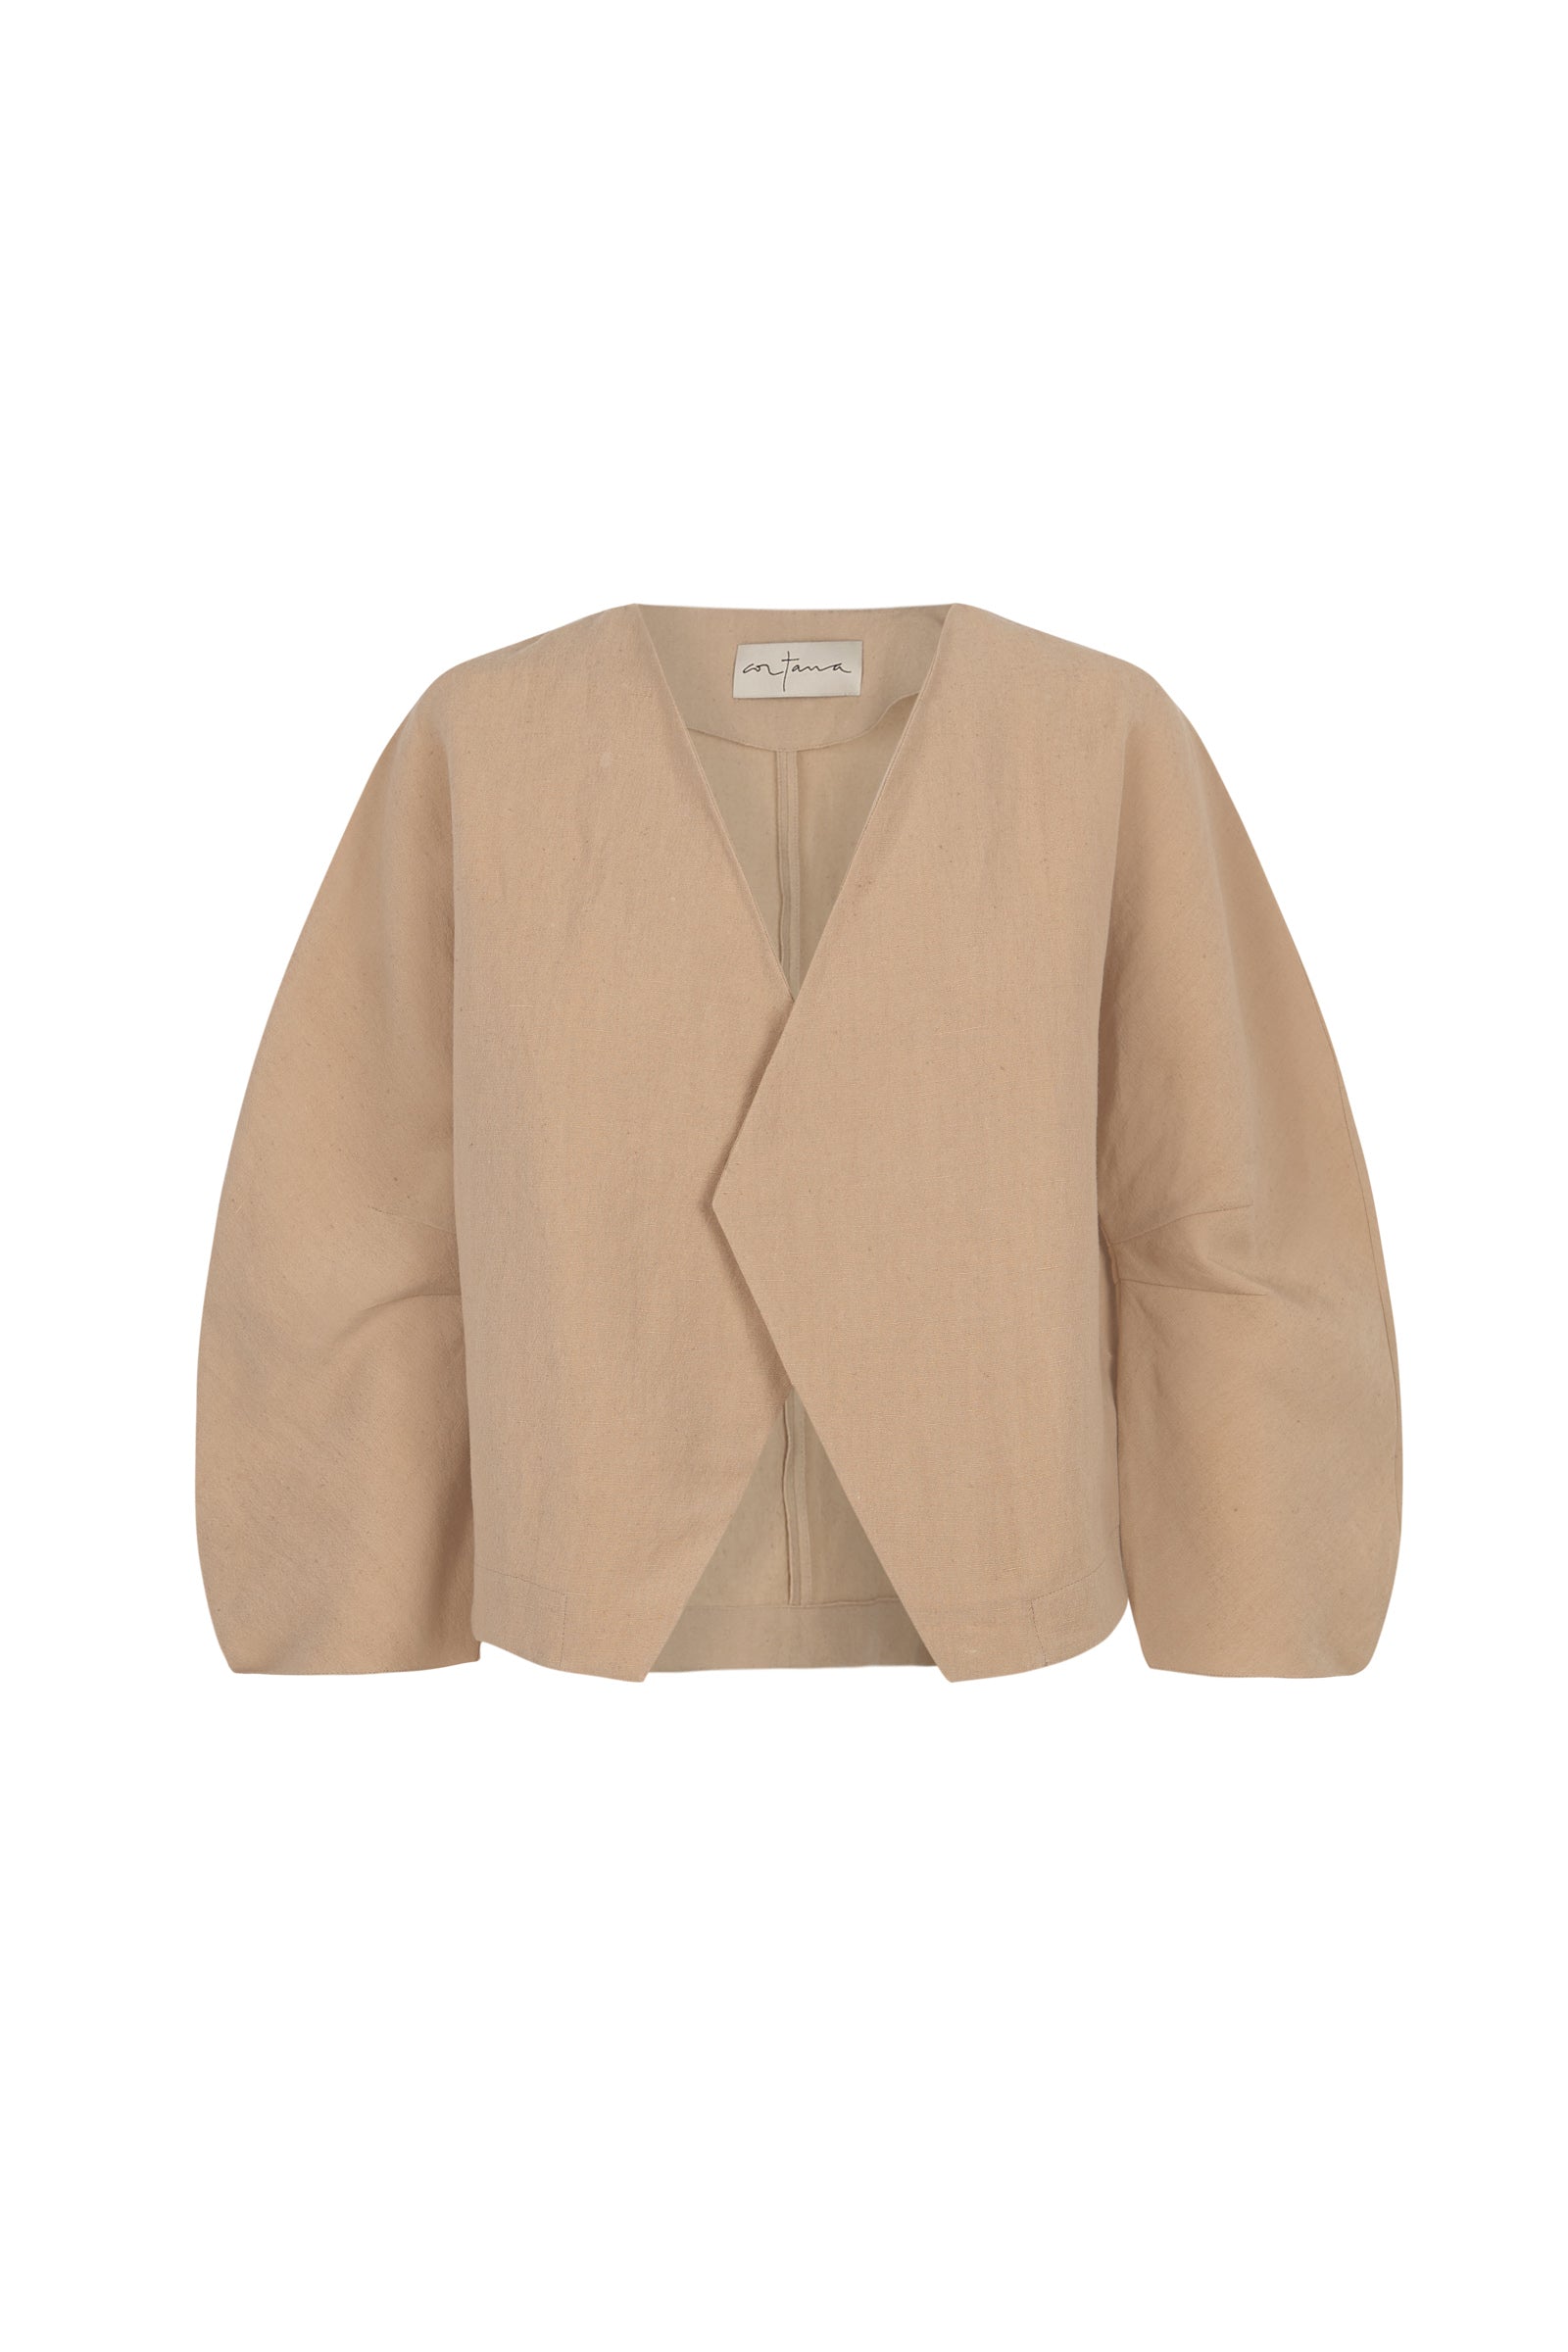 Dakota, pink linen and virgin wool jacket – Cortanaeshop